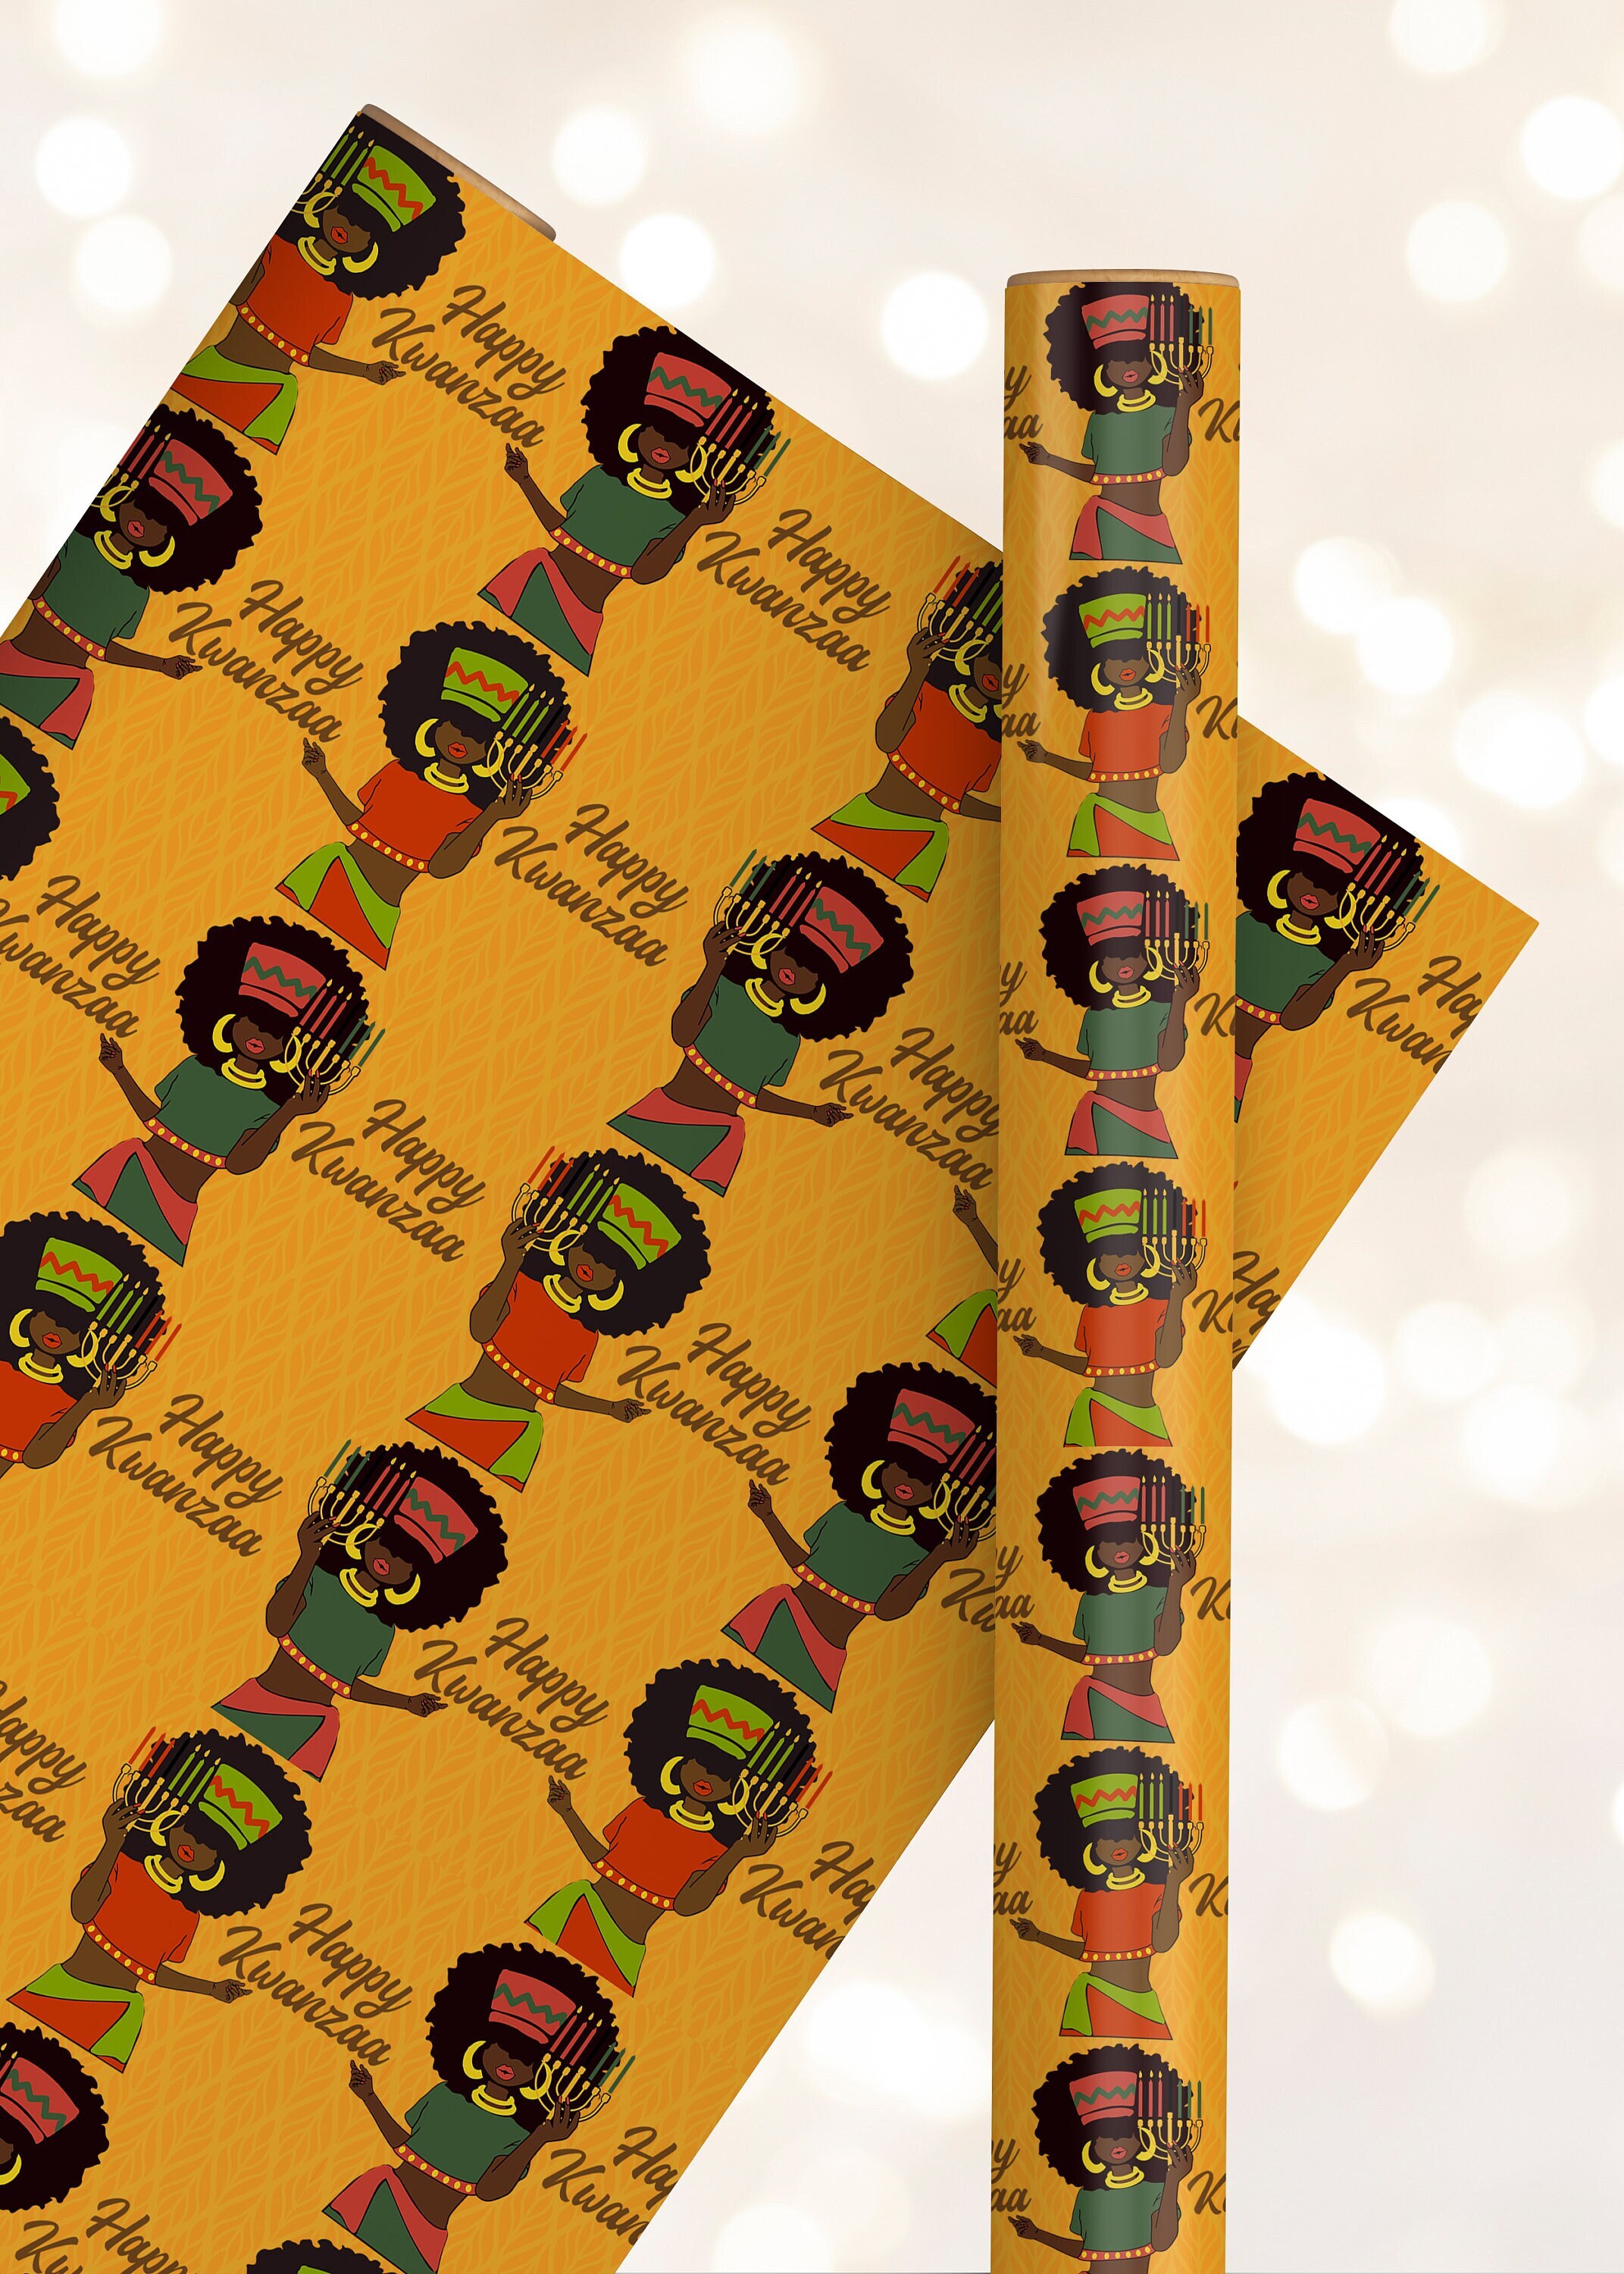 Vintage Gift Wrap - Kwanza  Happy kwanzaa, Vintage wrapping paper, Kwanzaa  principles